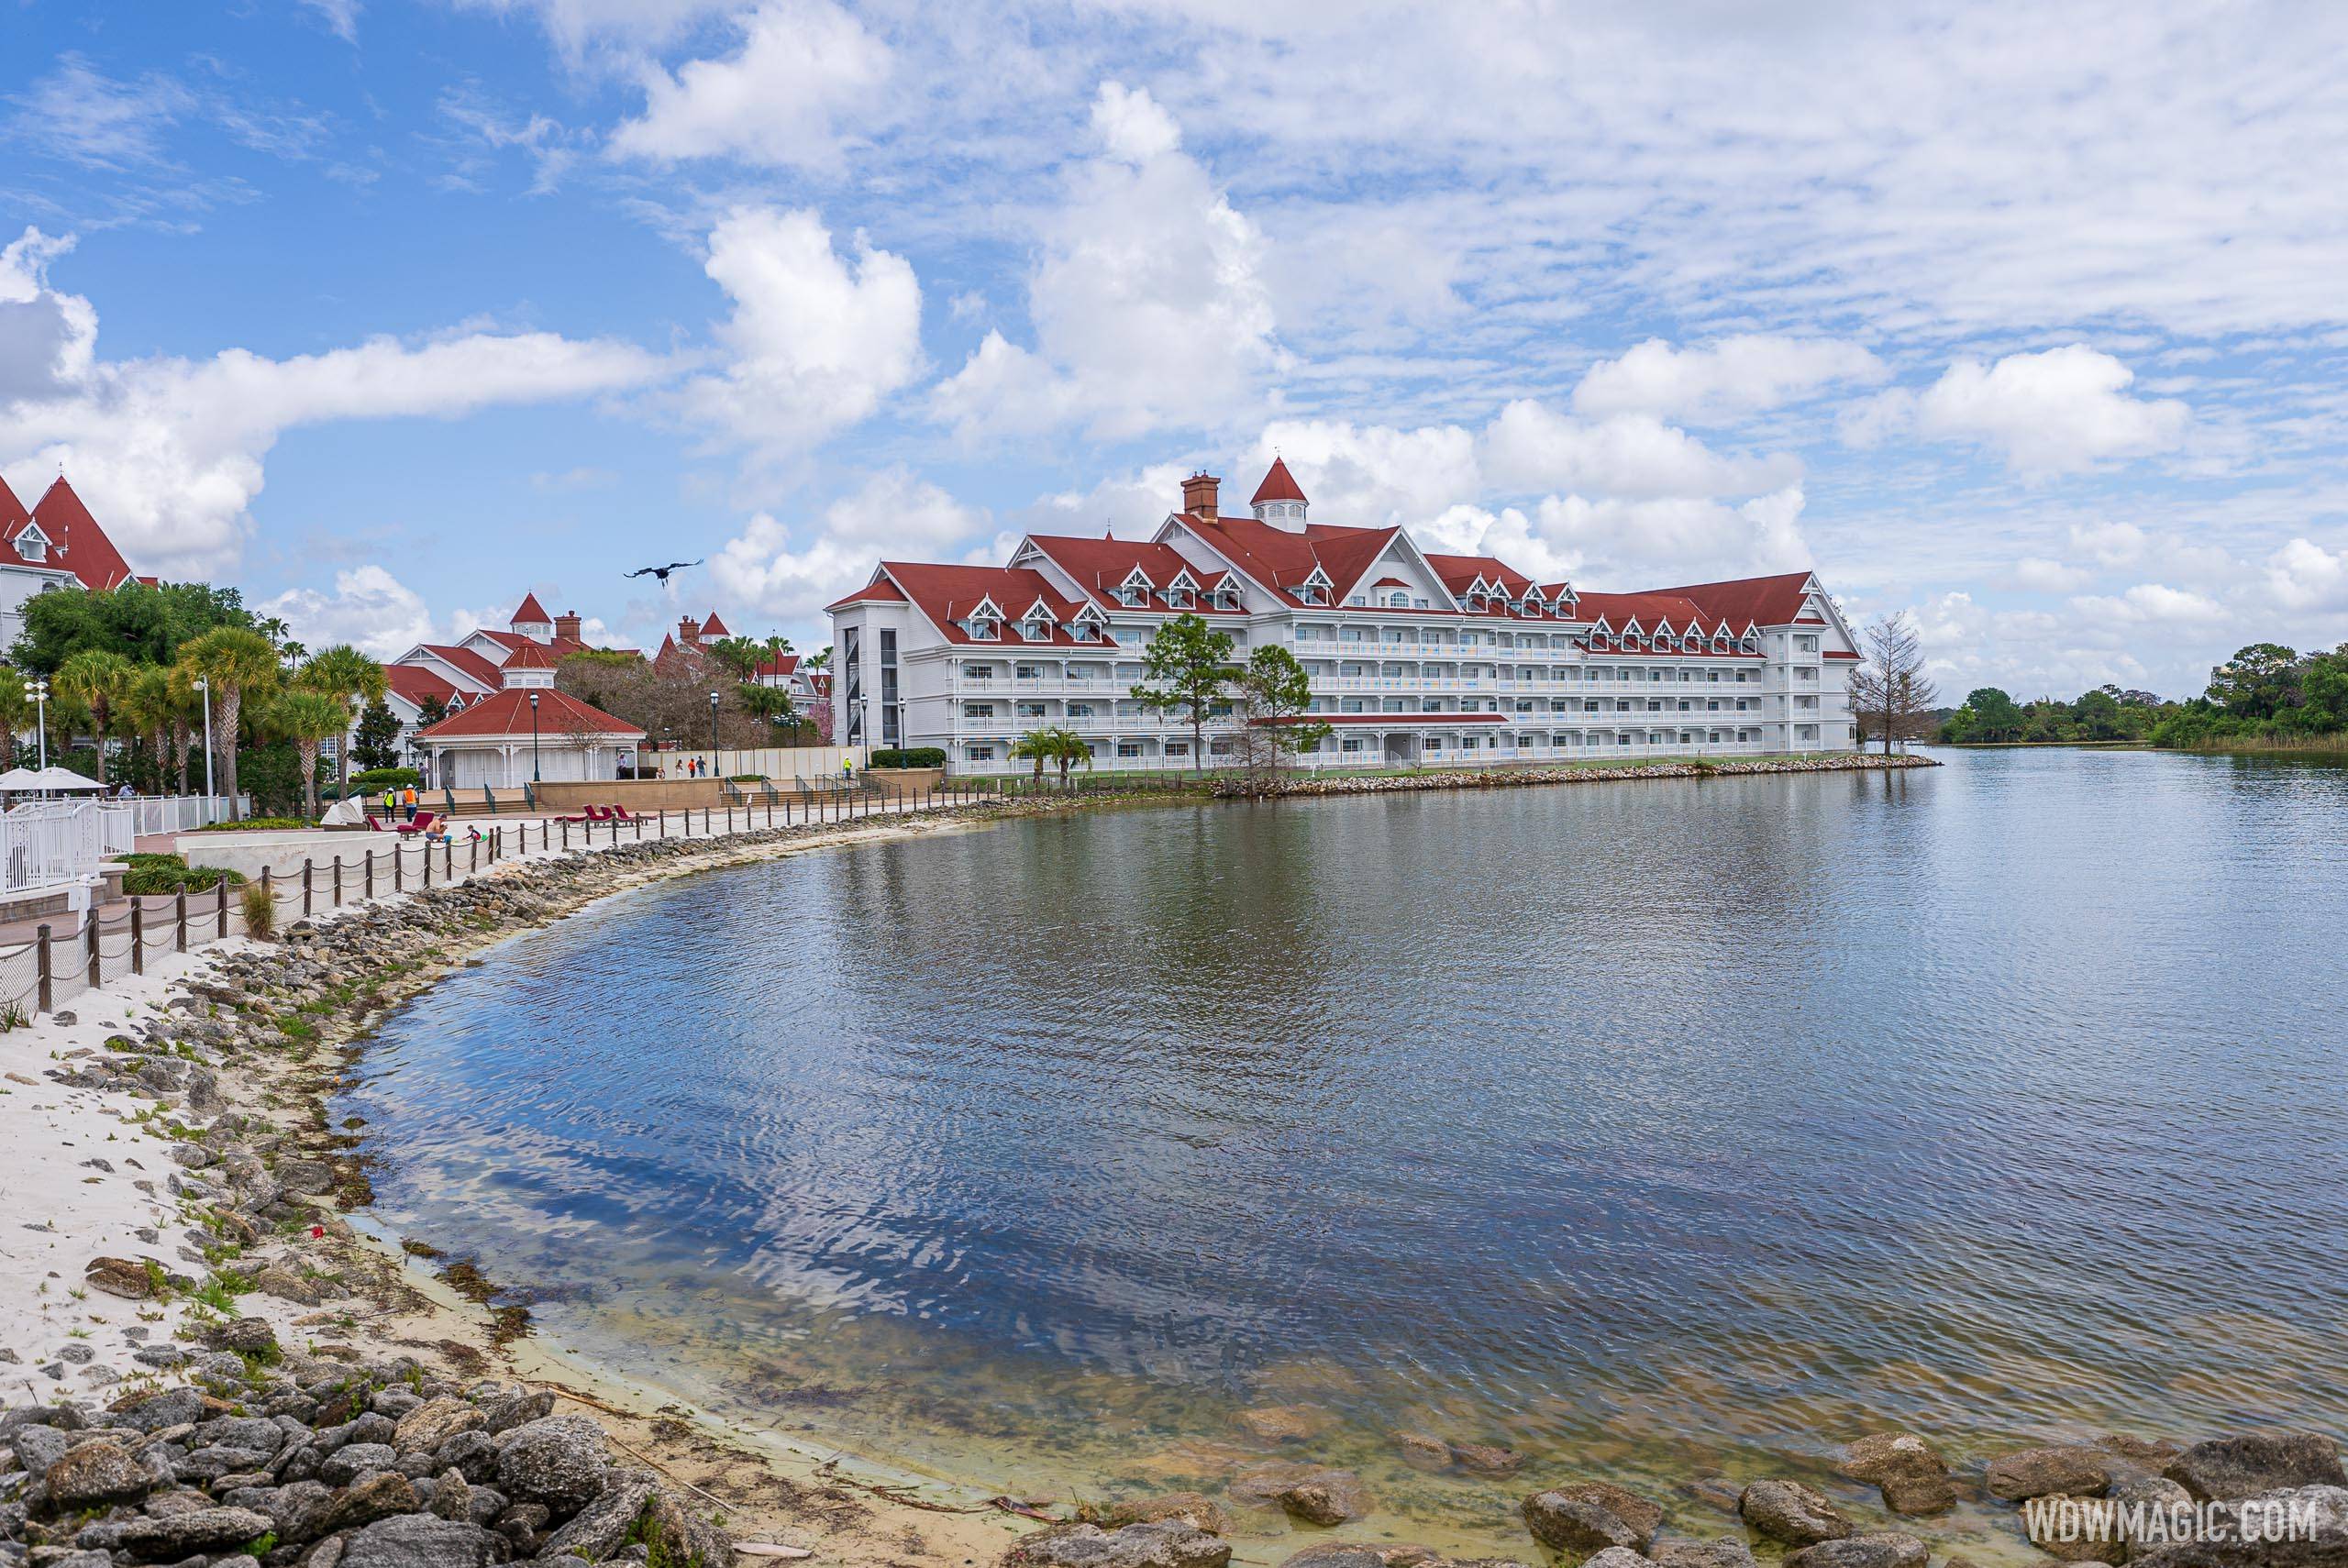 Construction walls Big Pine Key at Disney's Grand Floridian Resort - March 2022